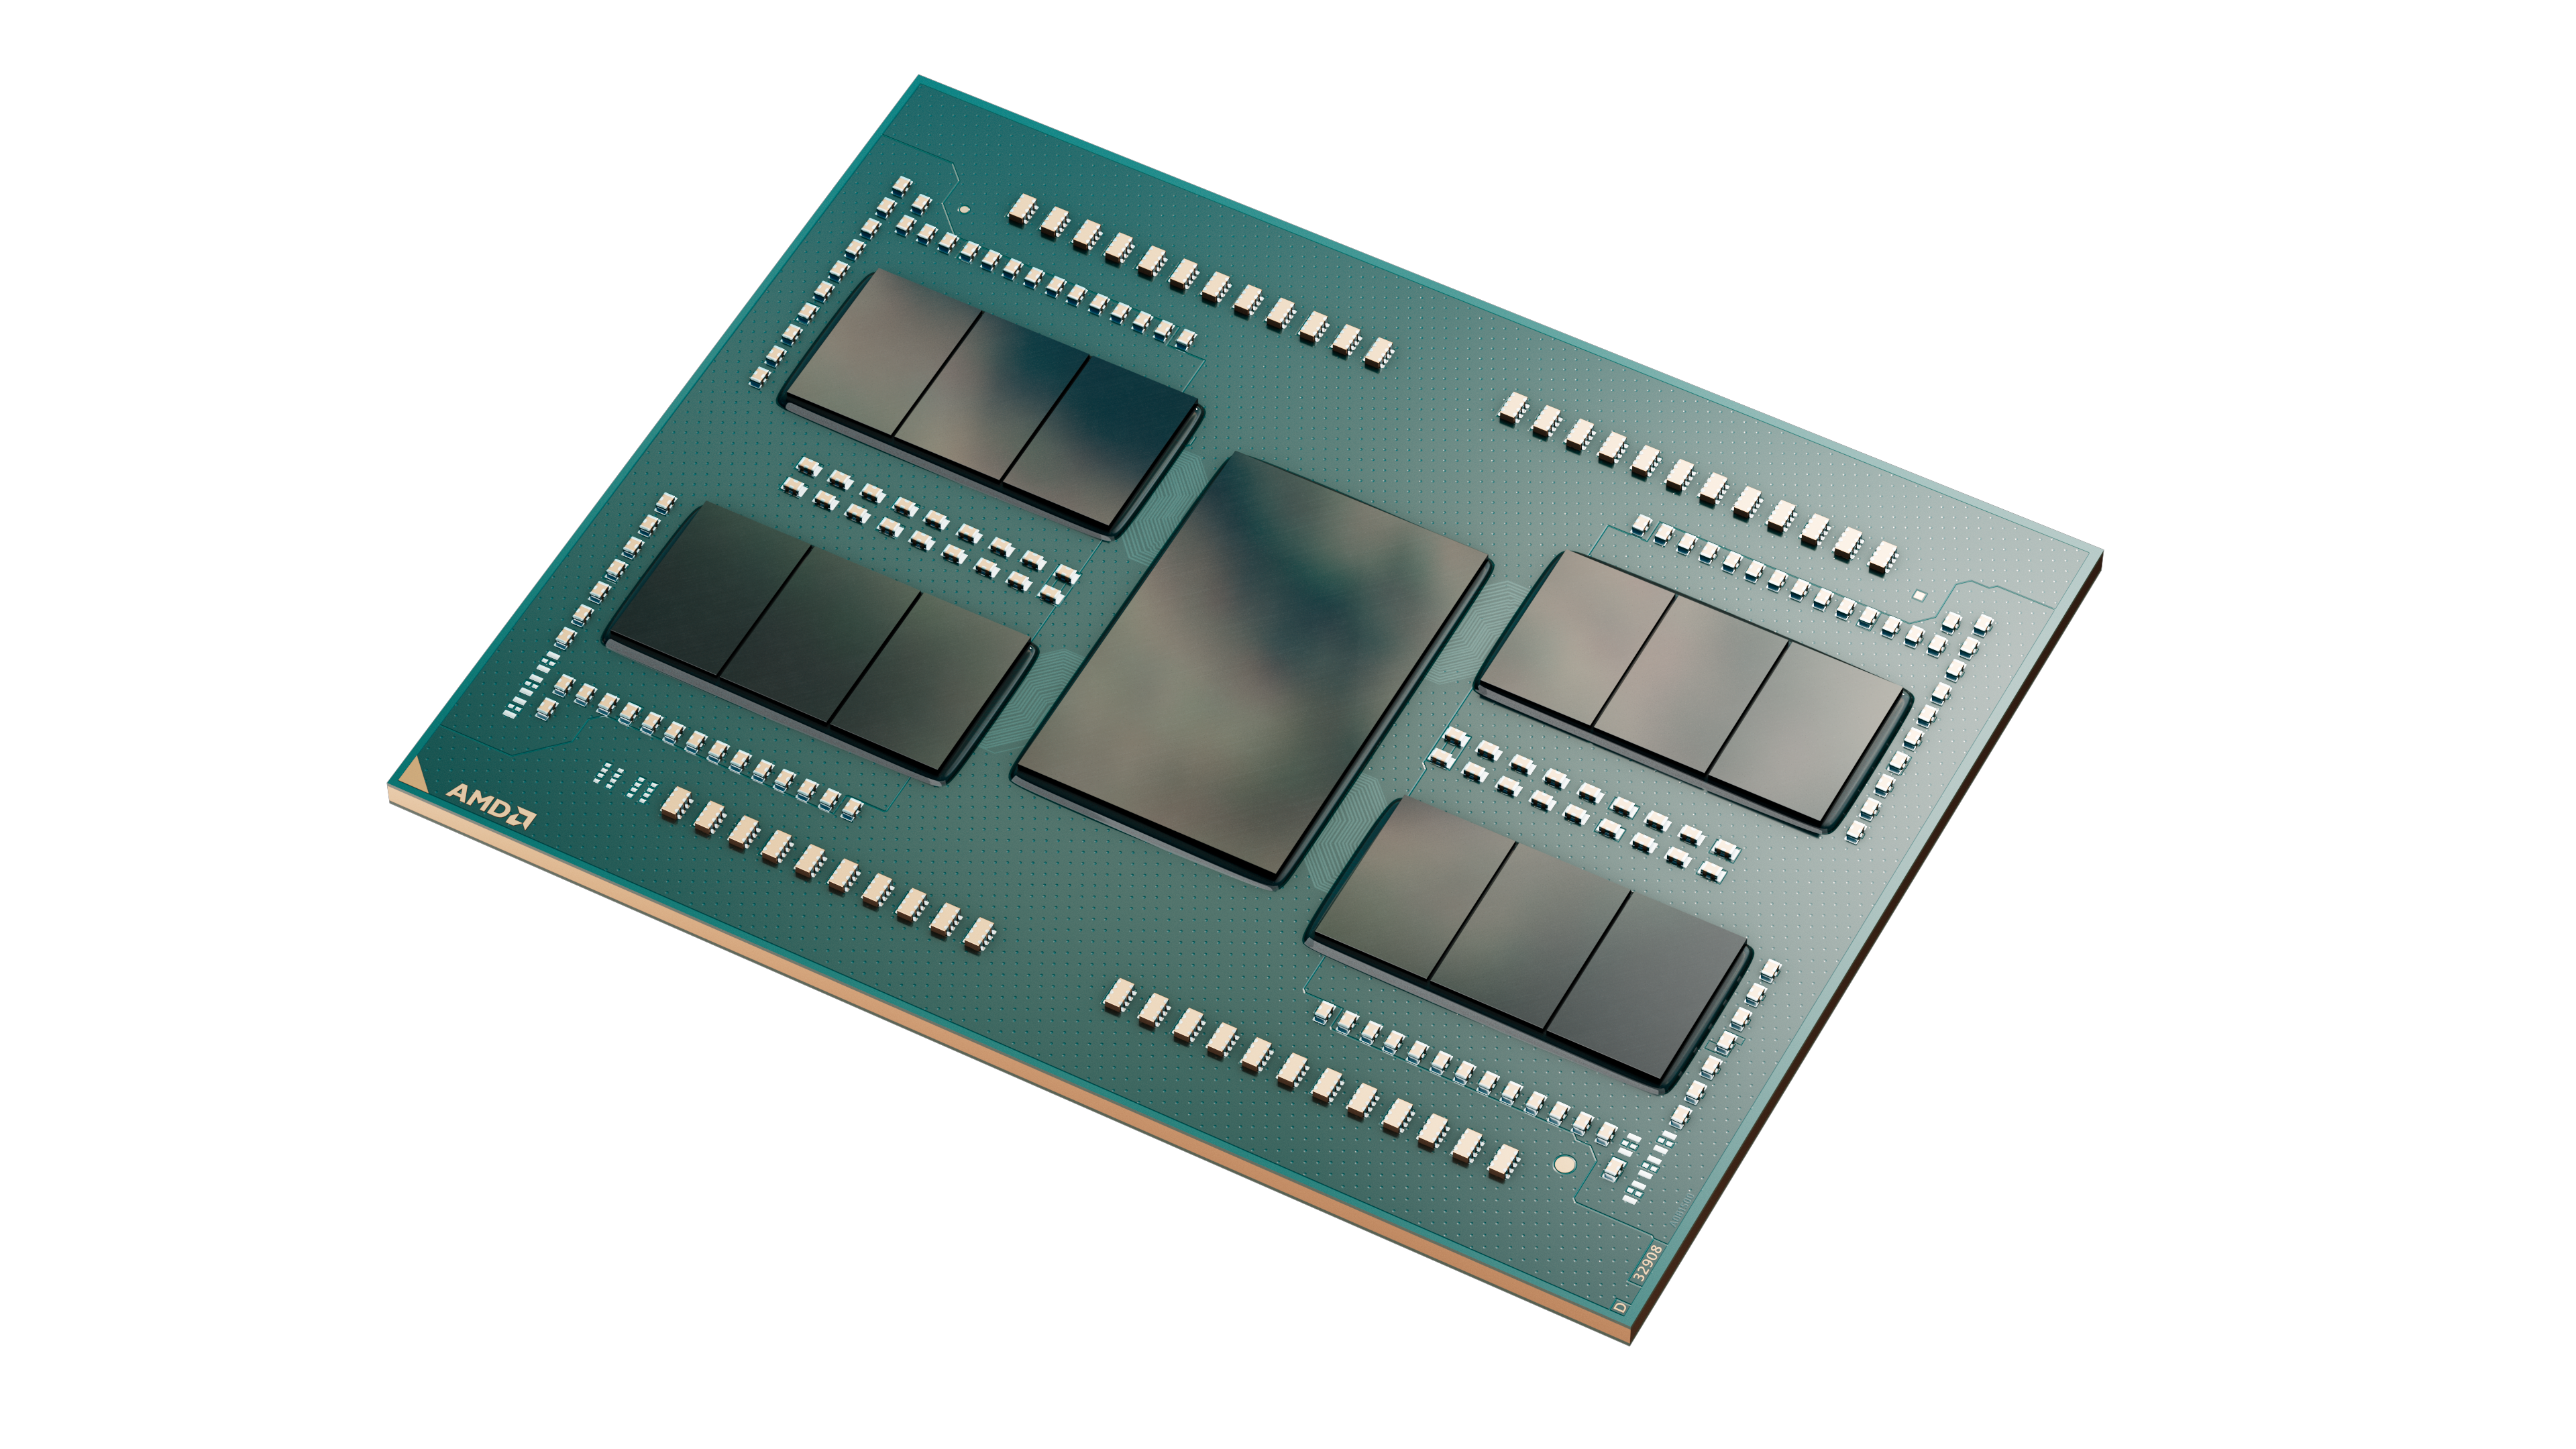 New AMD Threadripper 7980X, 7970X, 7960X, & Threadripper Pro CPUs